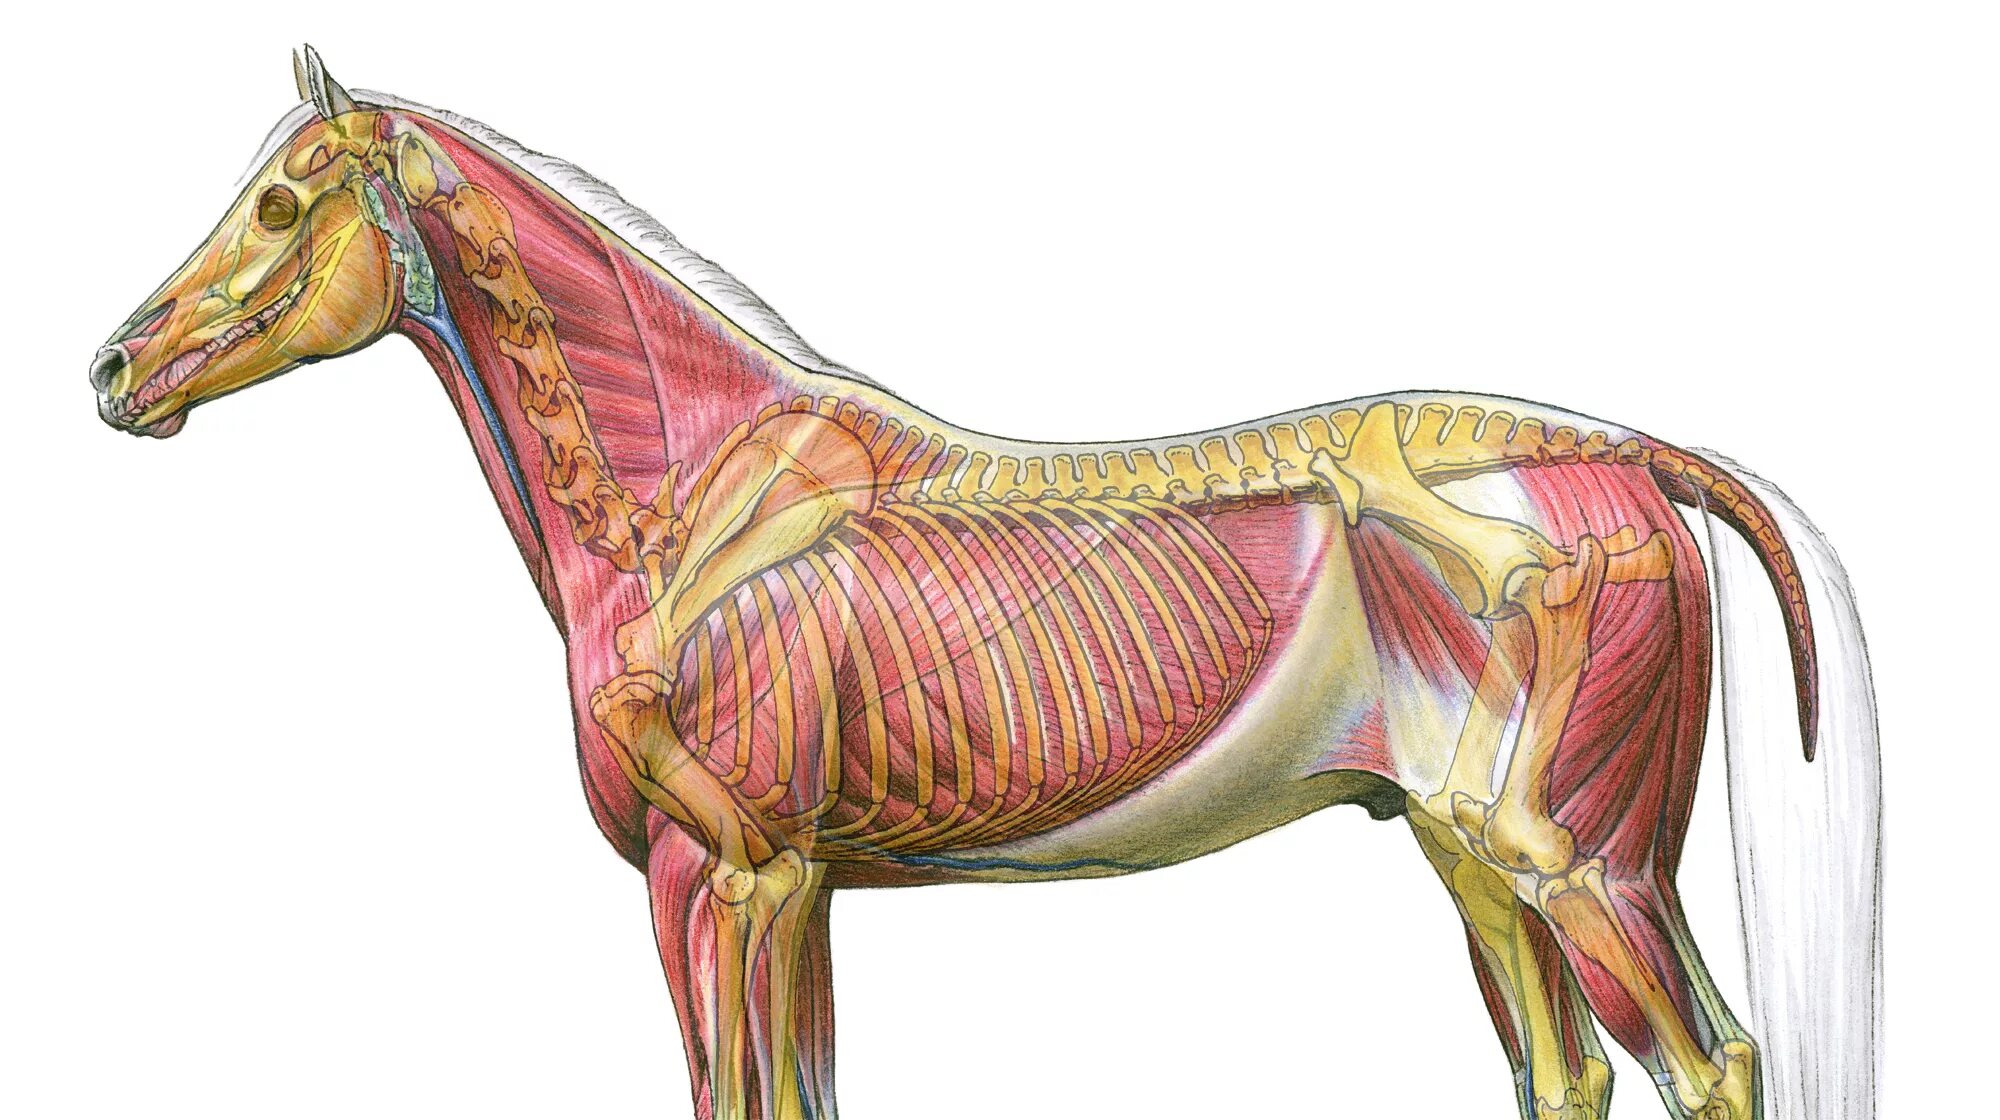 Мышцы туловища лошади анатомия. Стаббс анатомия лошади. Мышцы лошади анатомия. Мускулатура лошади анатомия. Мускулатура млекопитающих